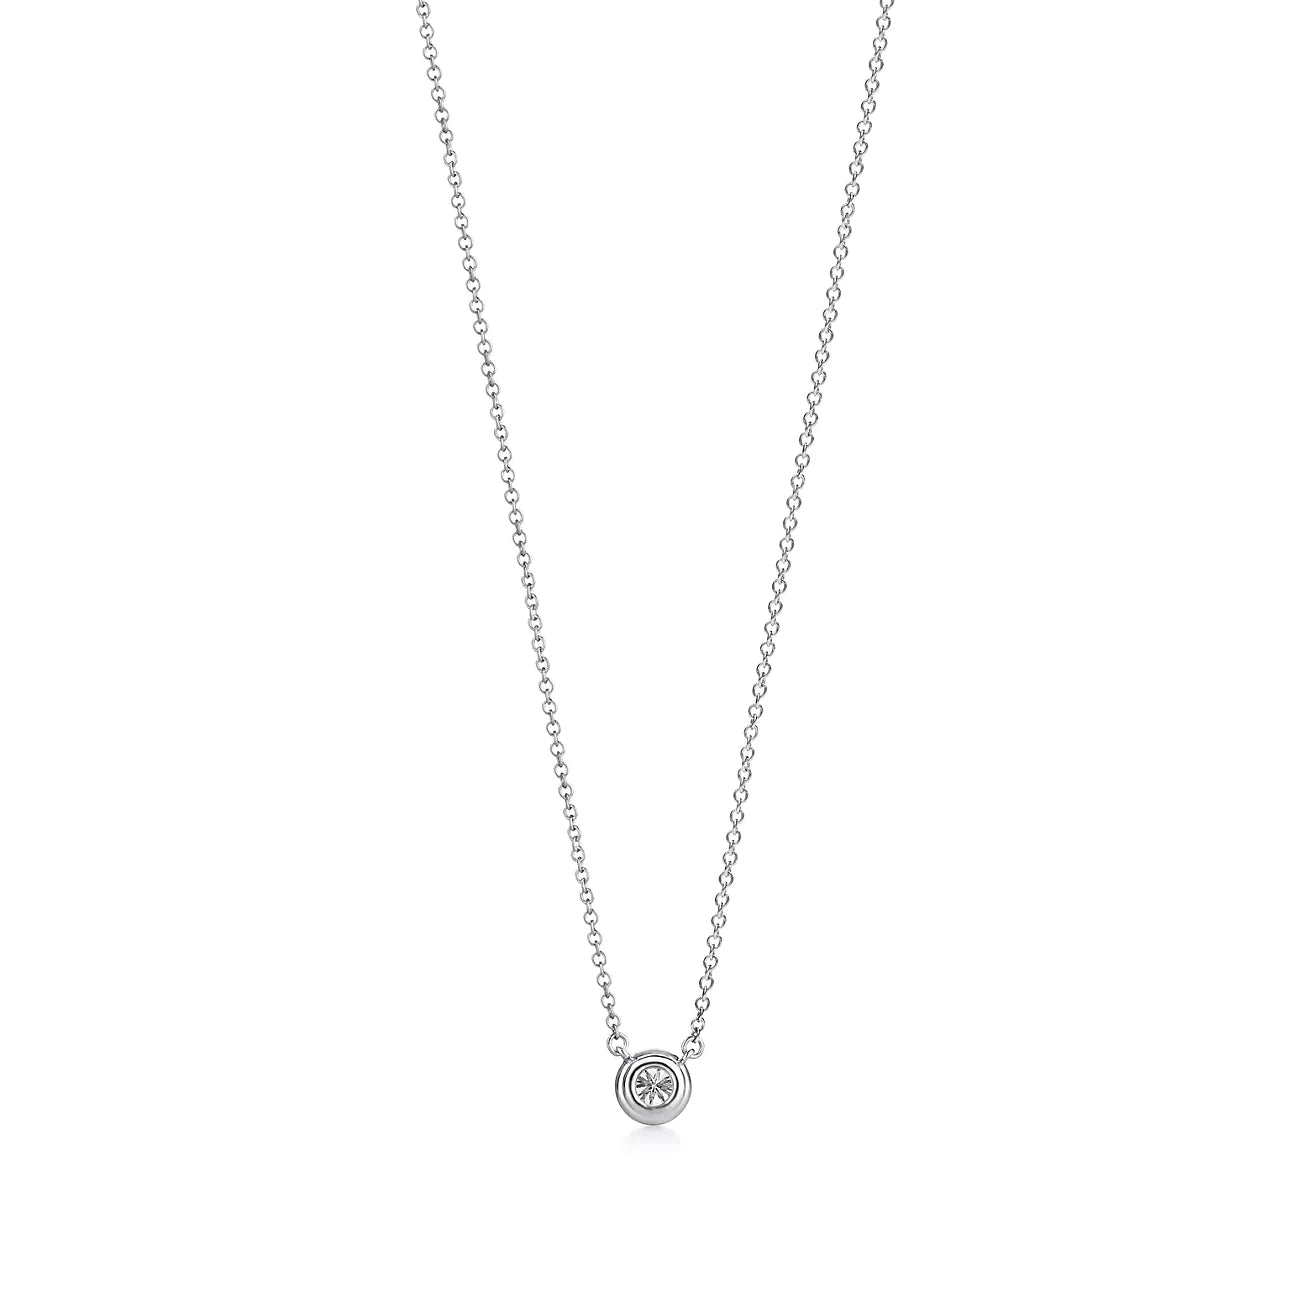 Preowned Tiffany & Co. Single Diamond Pendant Necklace